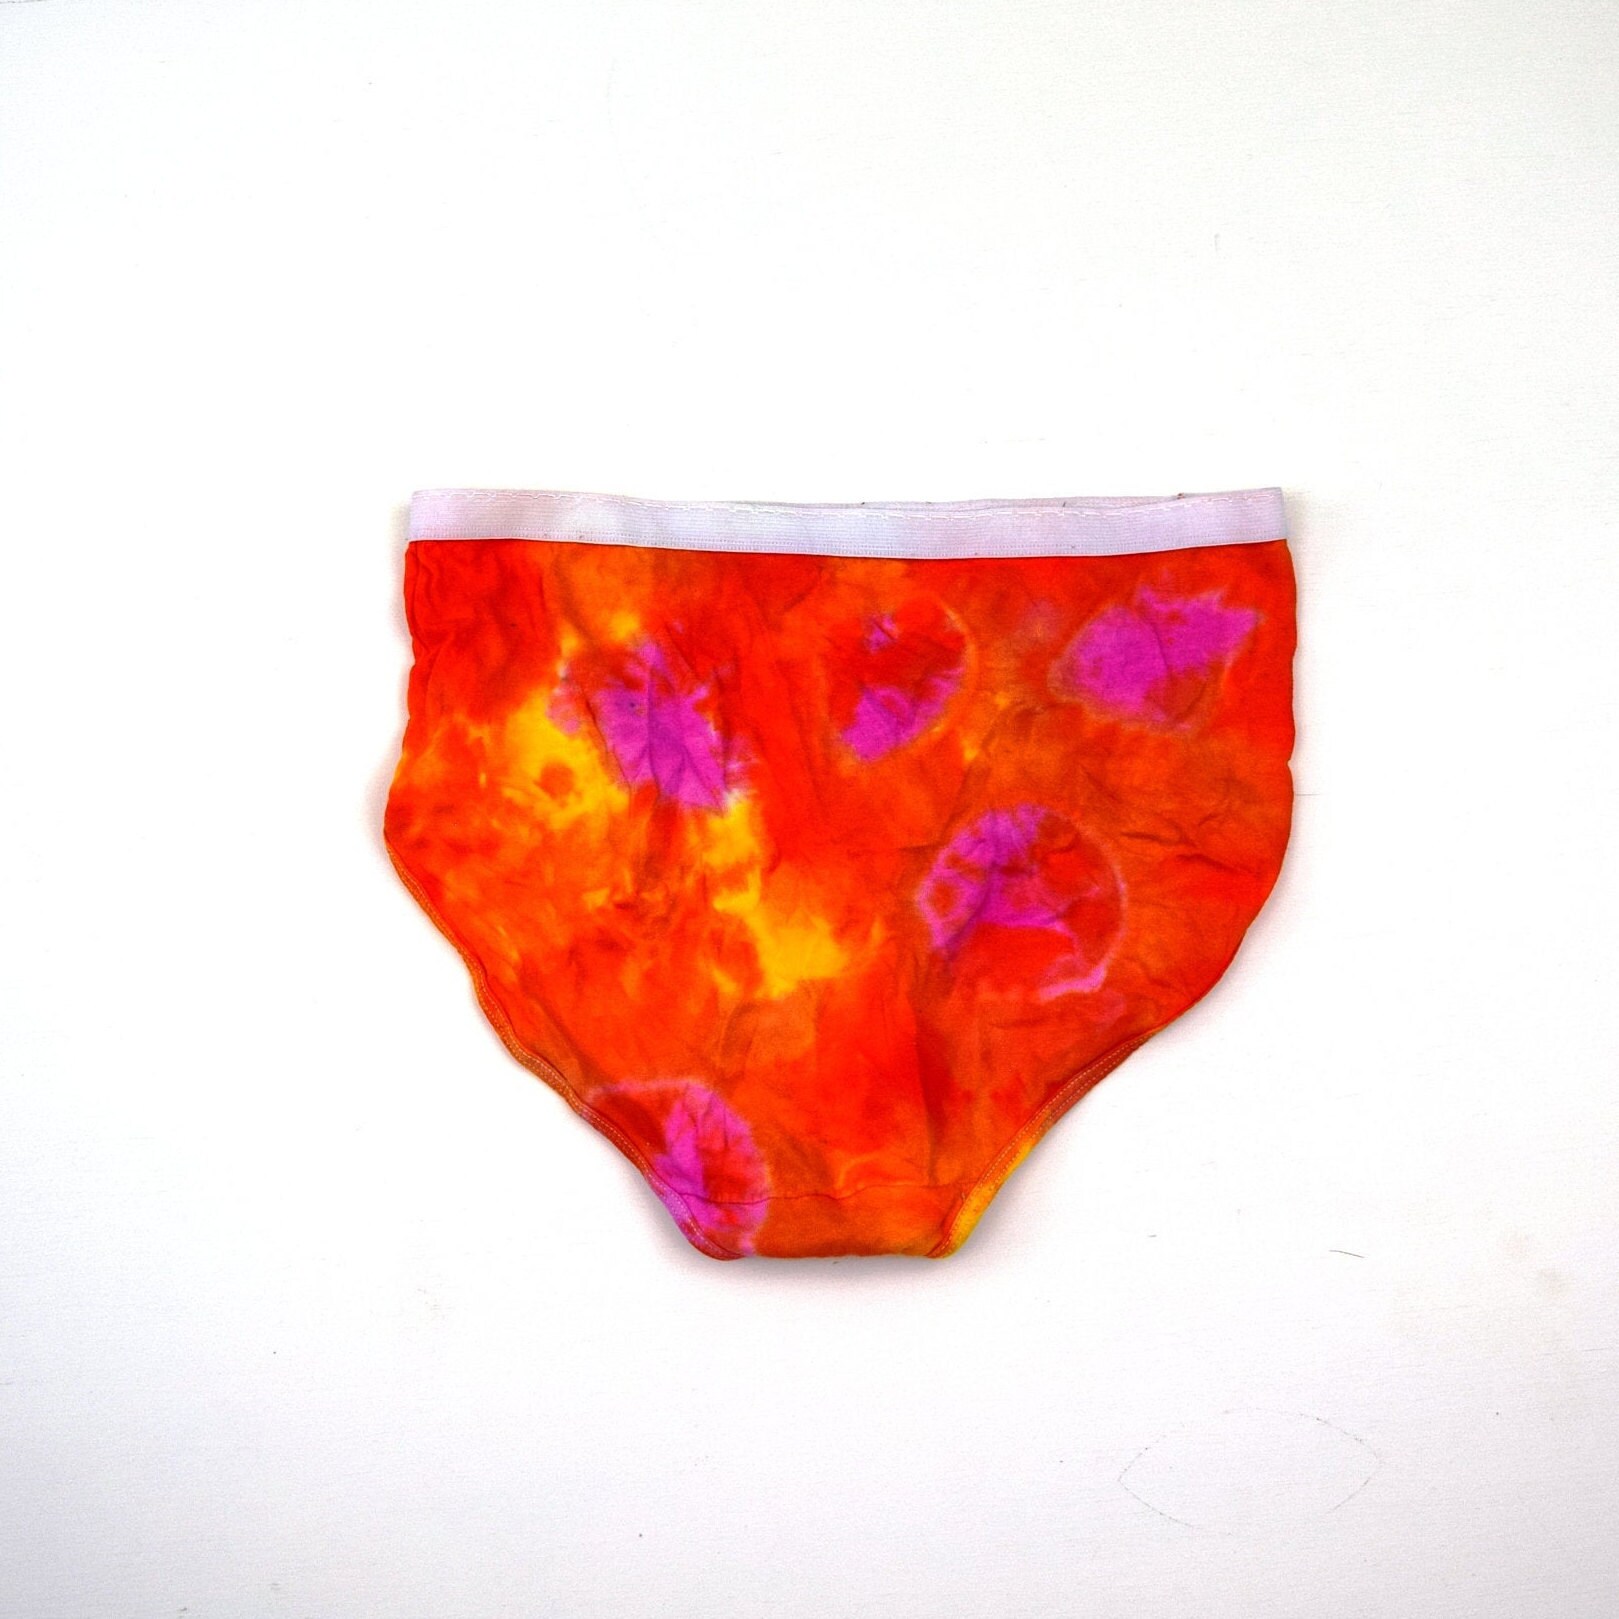 Sunset Tie Dye Women's Briefs Underwear fruit of the Loom Fit for